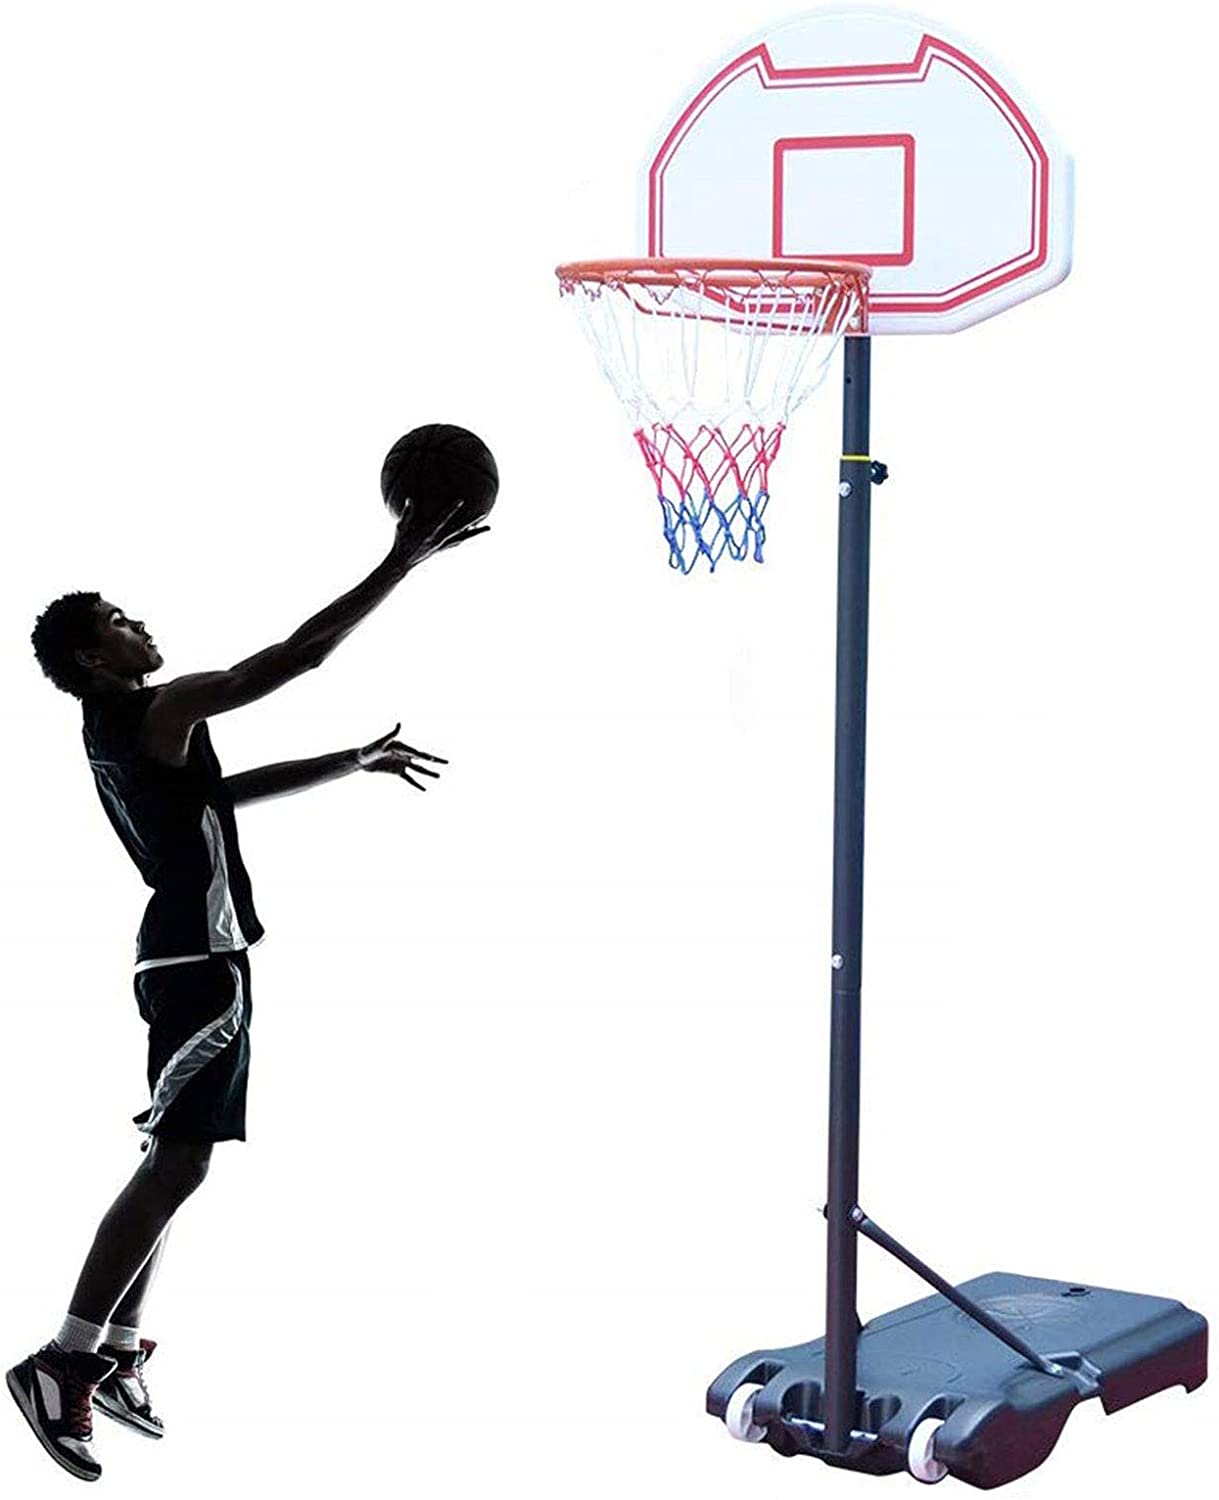 Sibosen Portable Height-Adjustable Basketball Hoop System